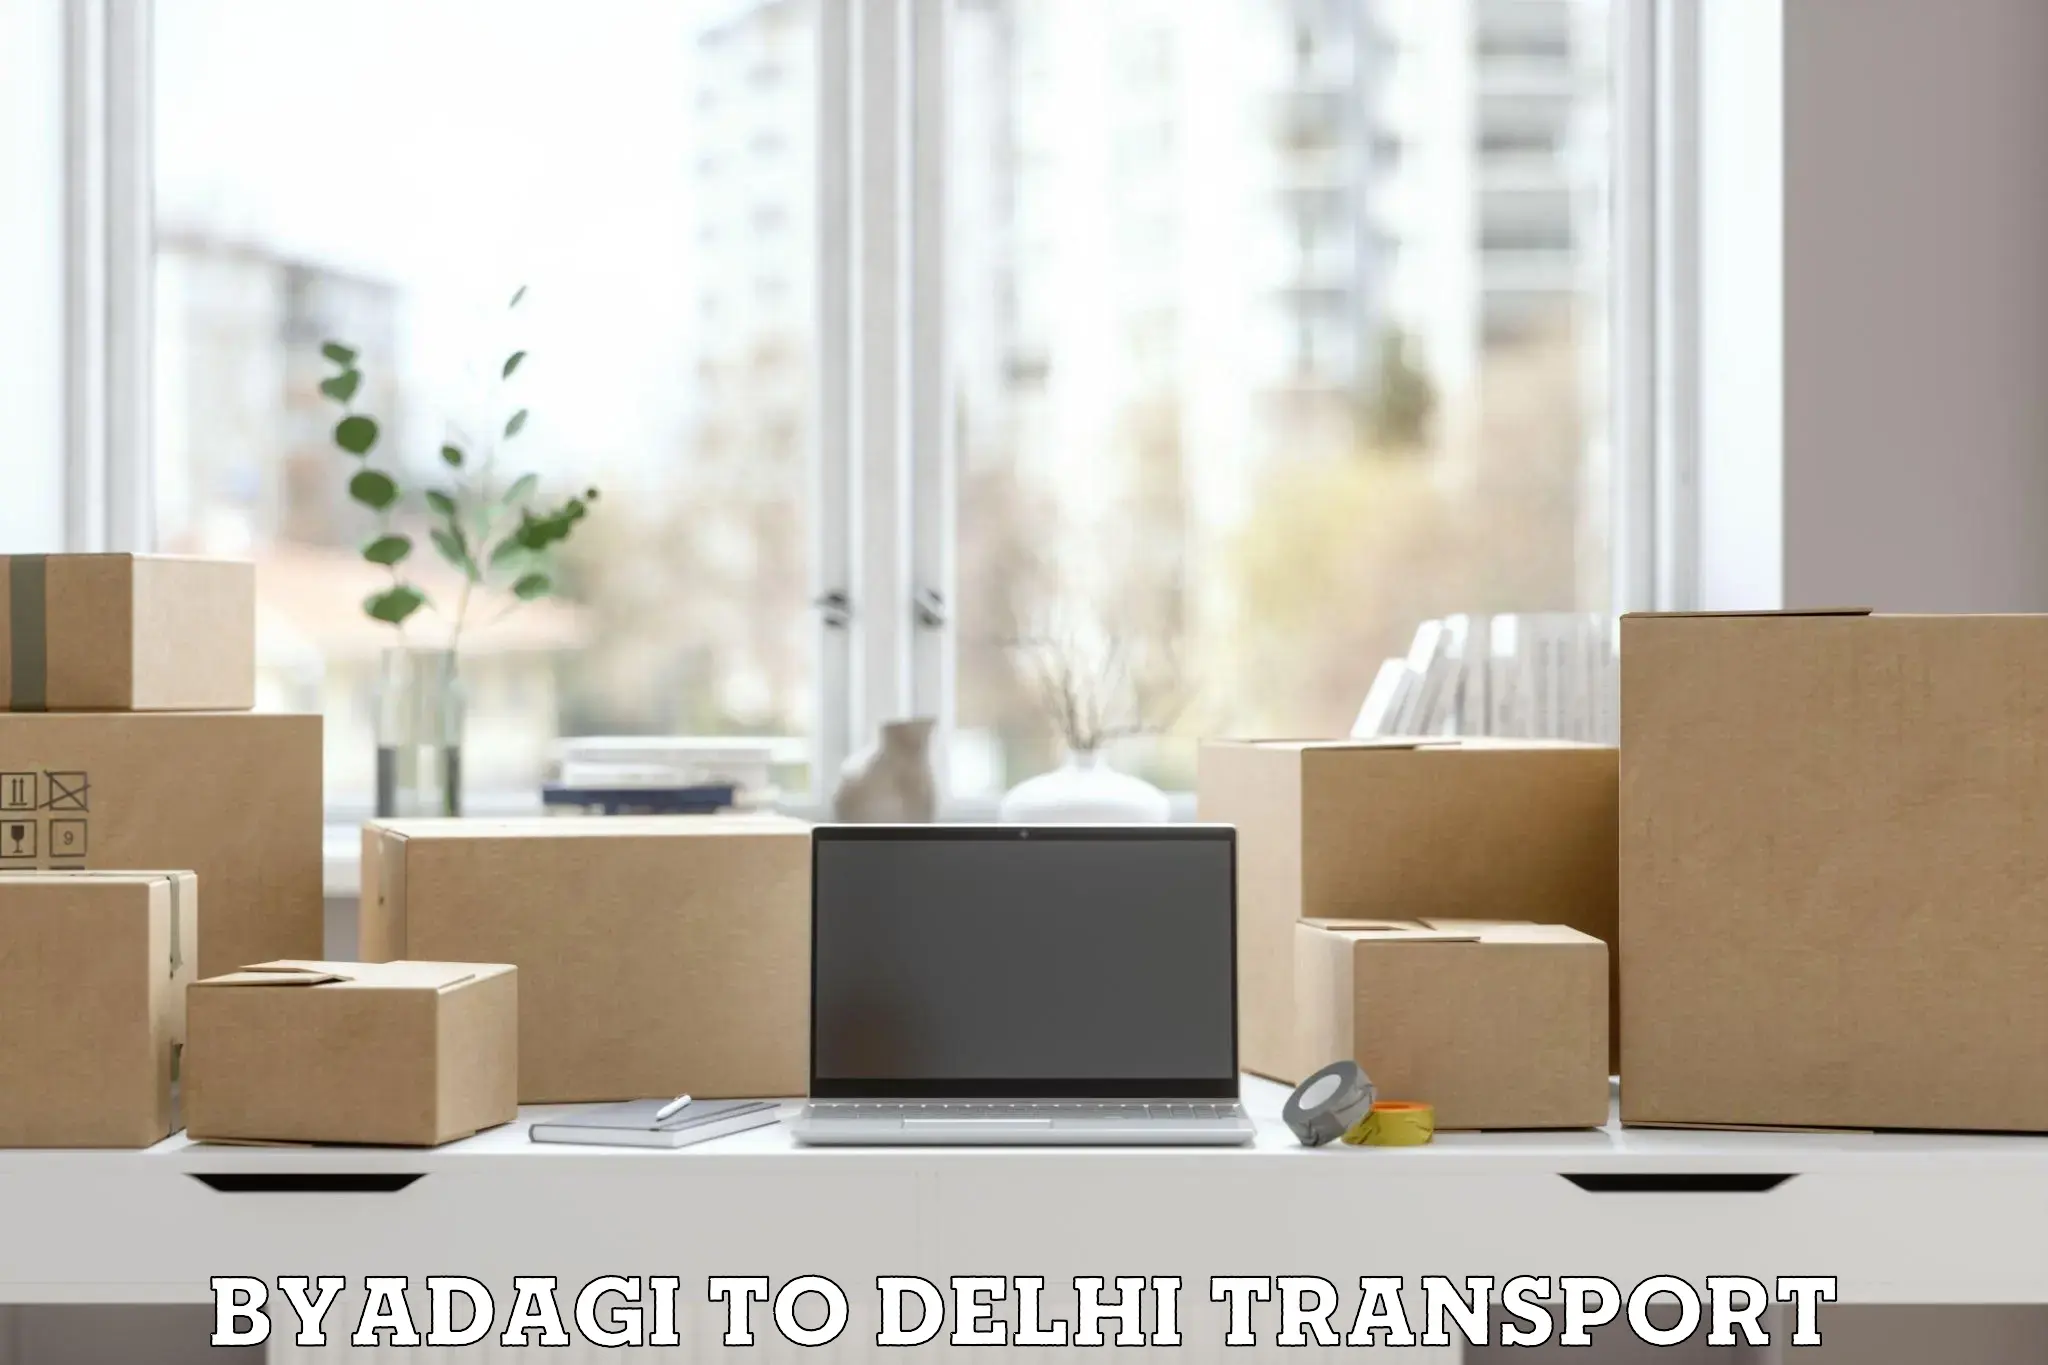 Sending bike to another city Byadagi to Delhi